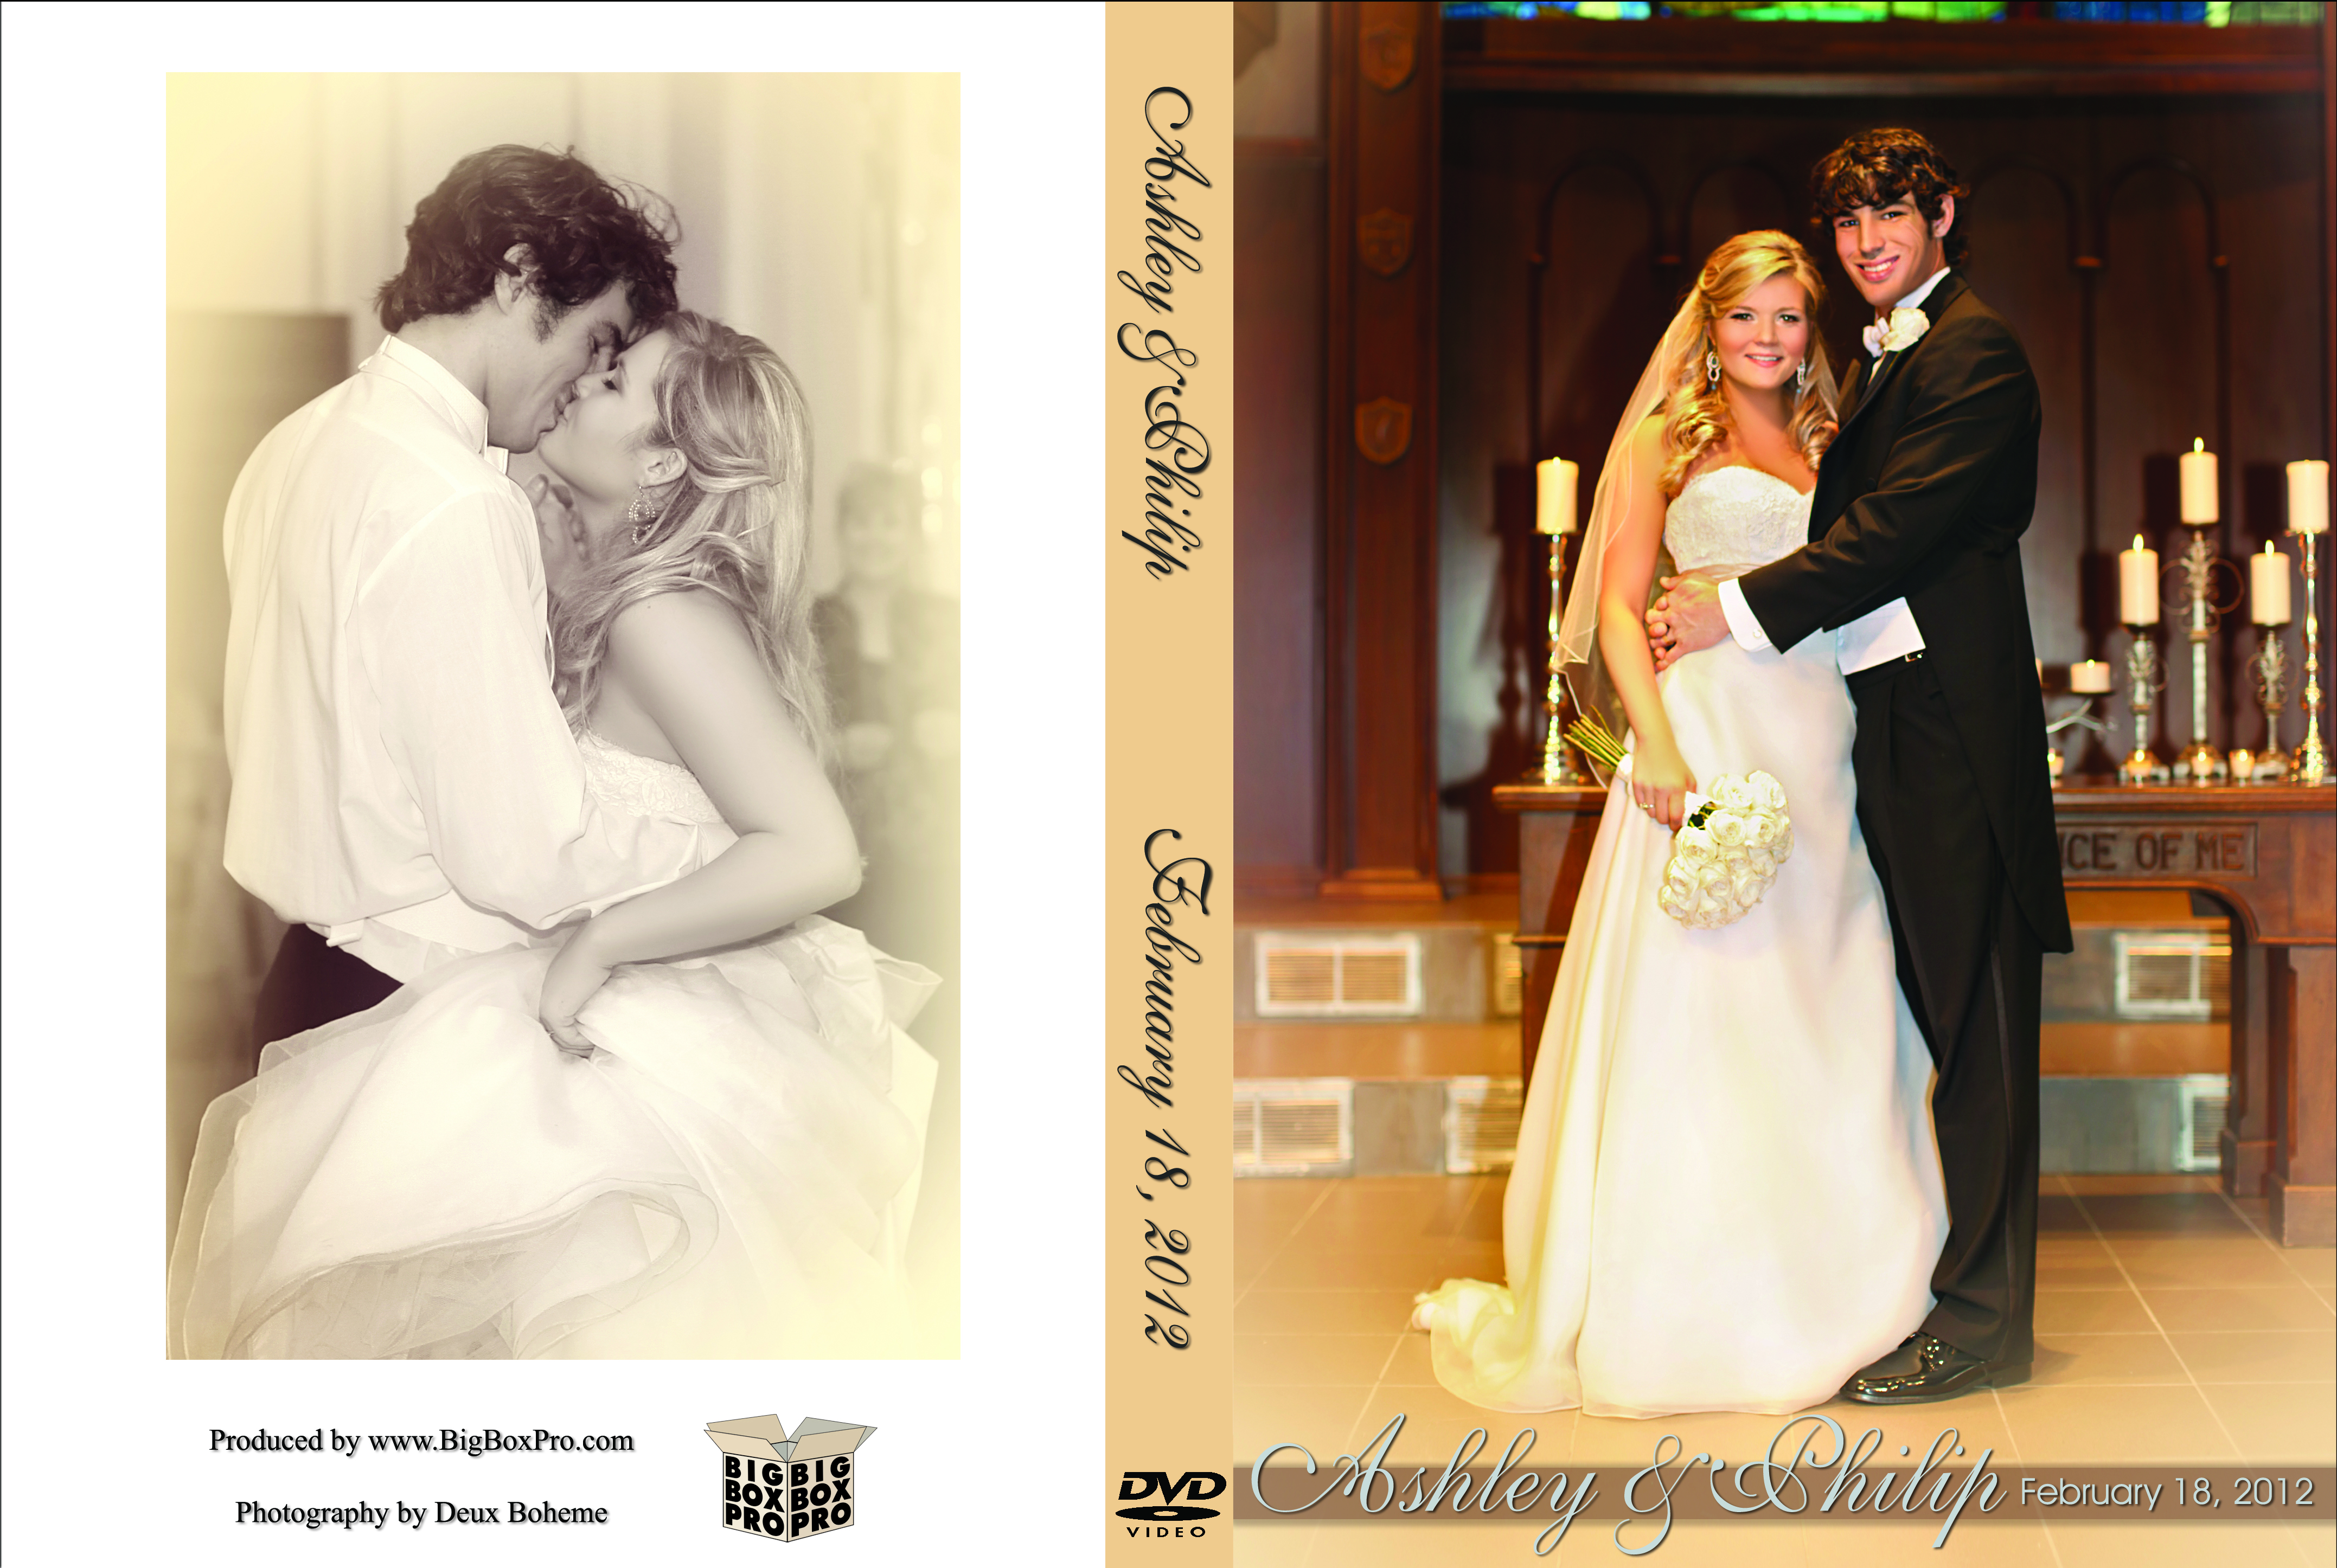 Ashley & Philip's Wedding DVD Case